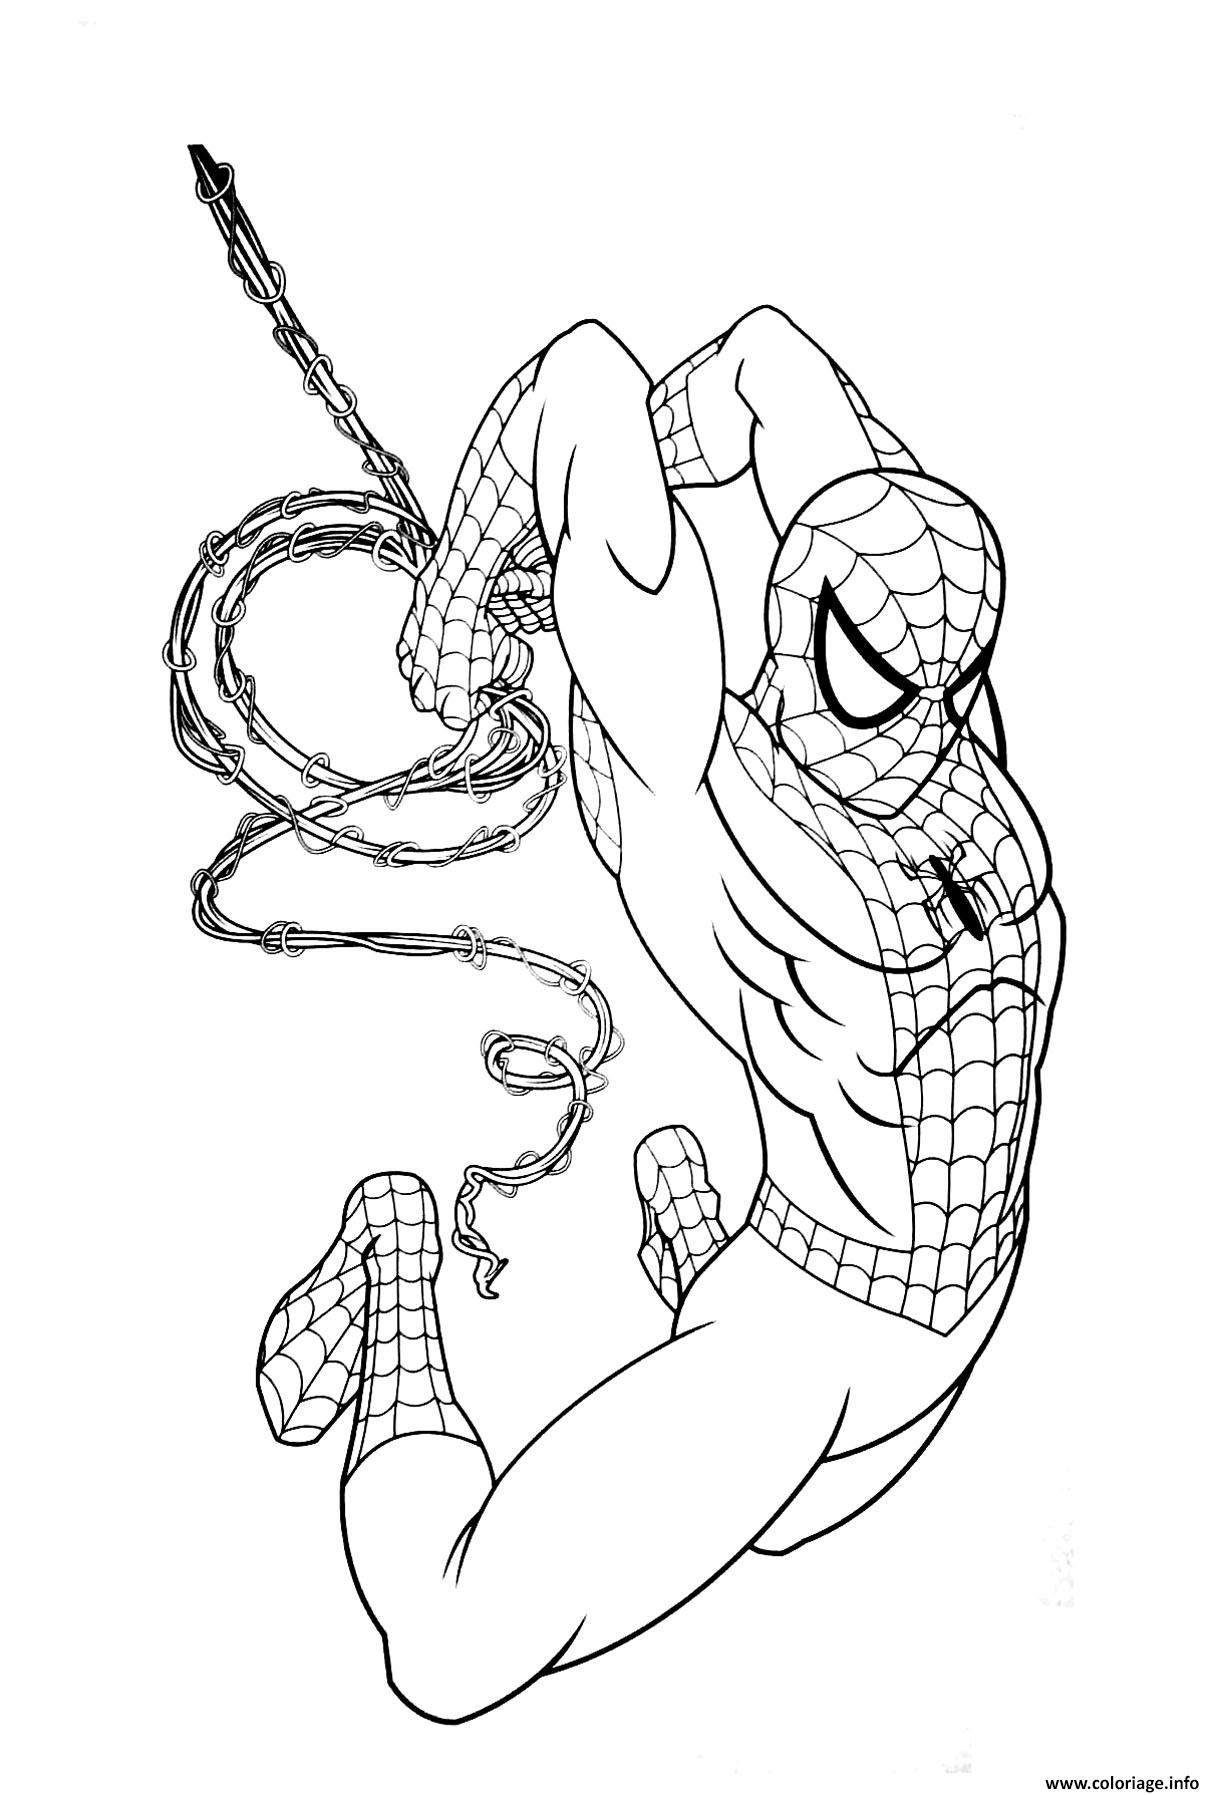 Dessin garcon super heros marvel spiderman Coloriage Gratuit à Imprimer